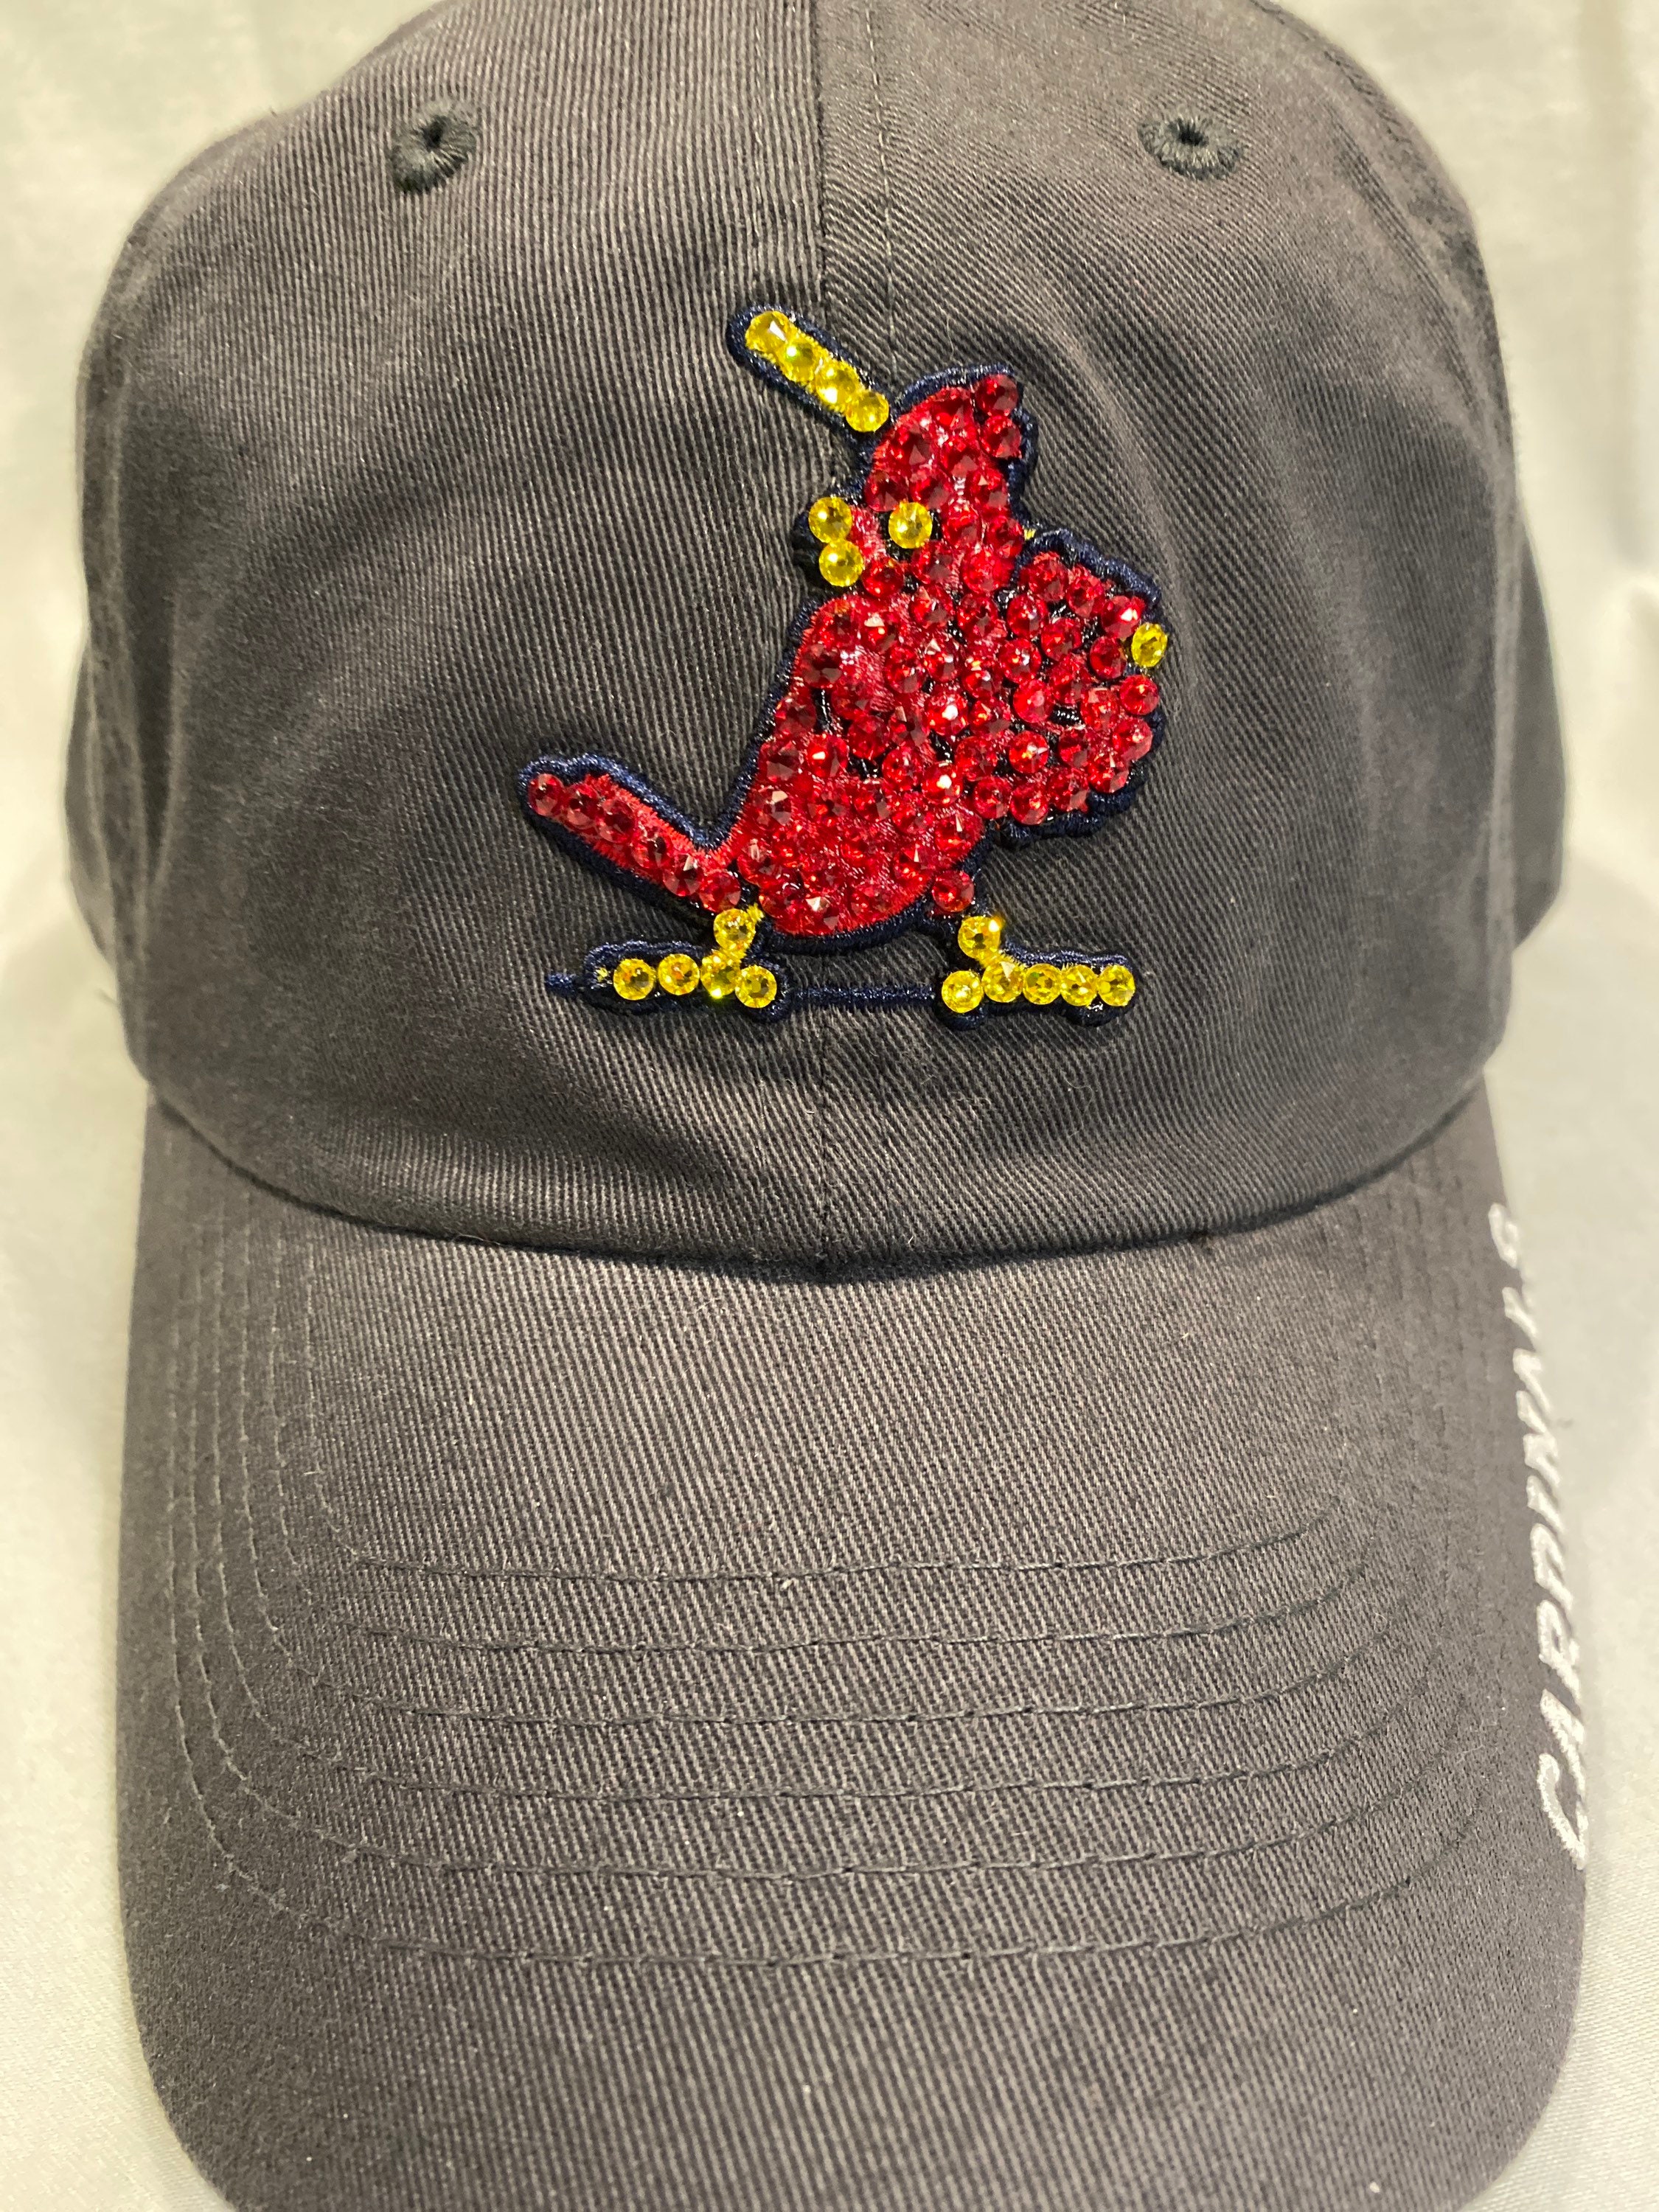 St. Louis Cardinals '47 Vintage Clean Up Adjustable Hat - Navy